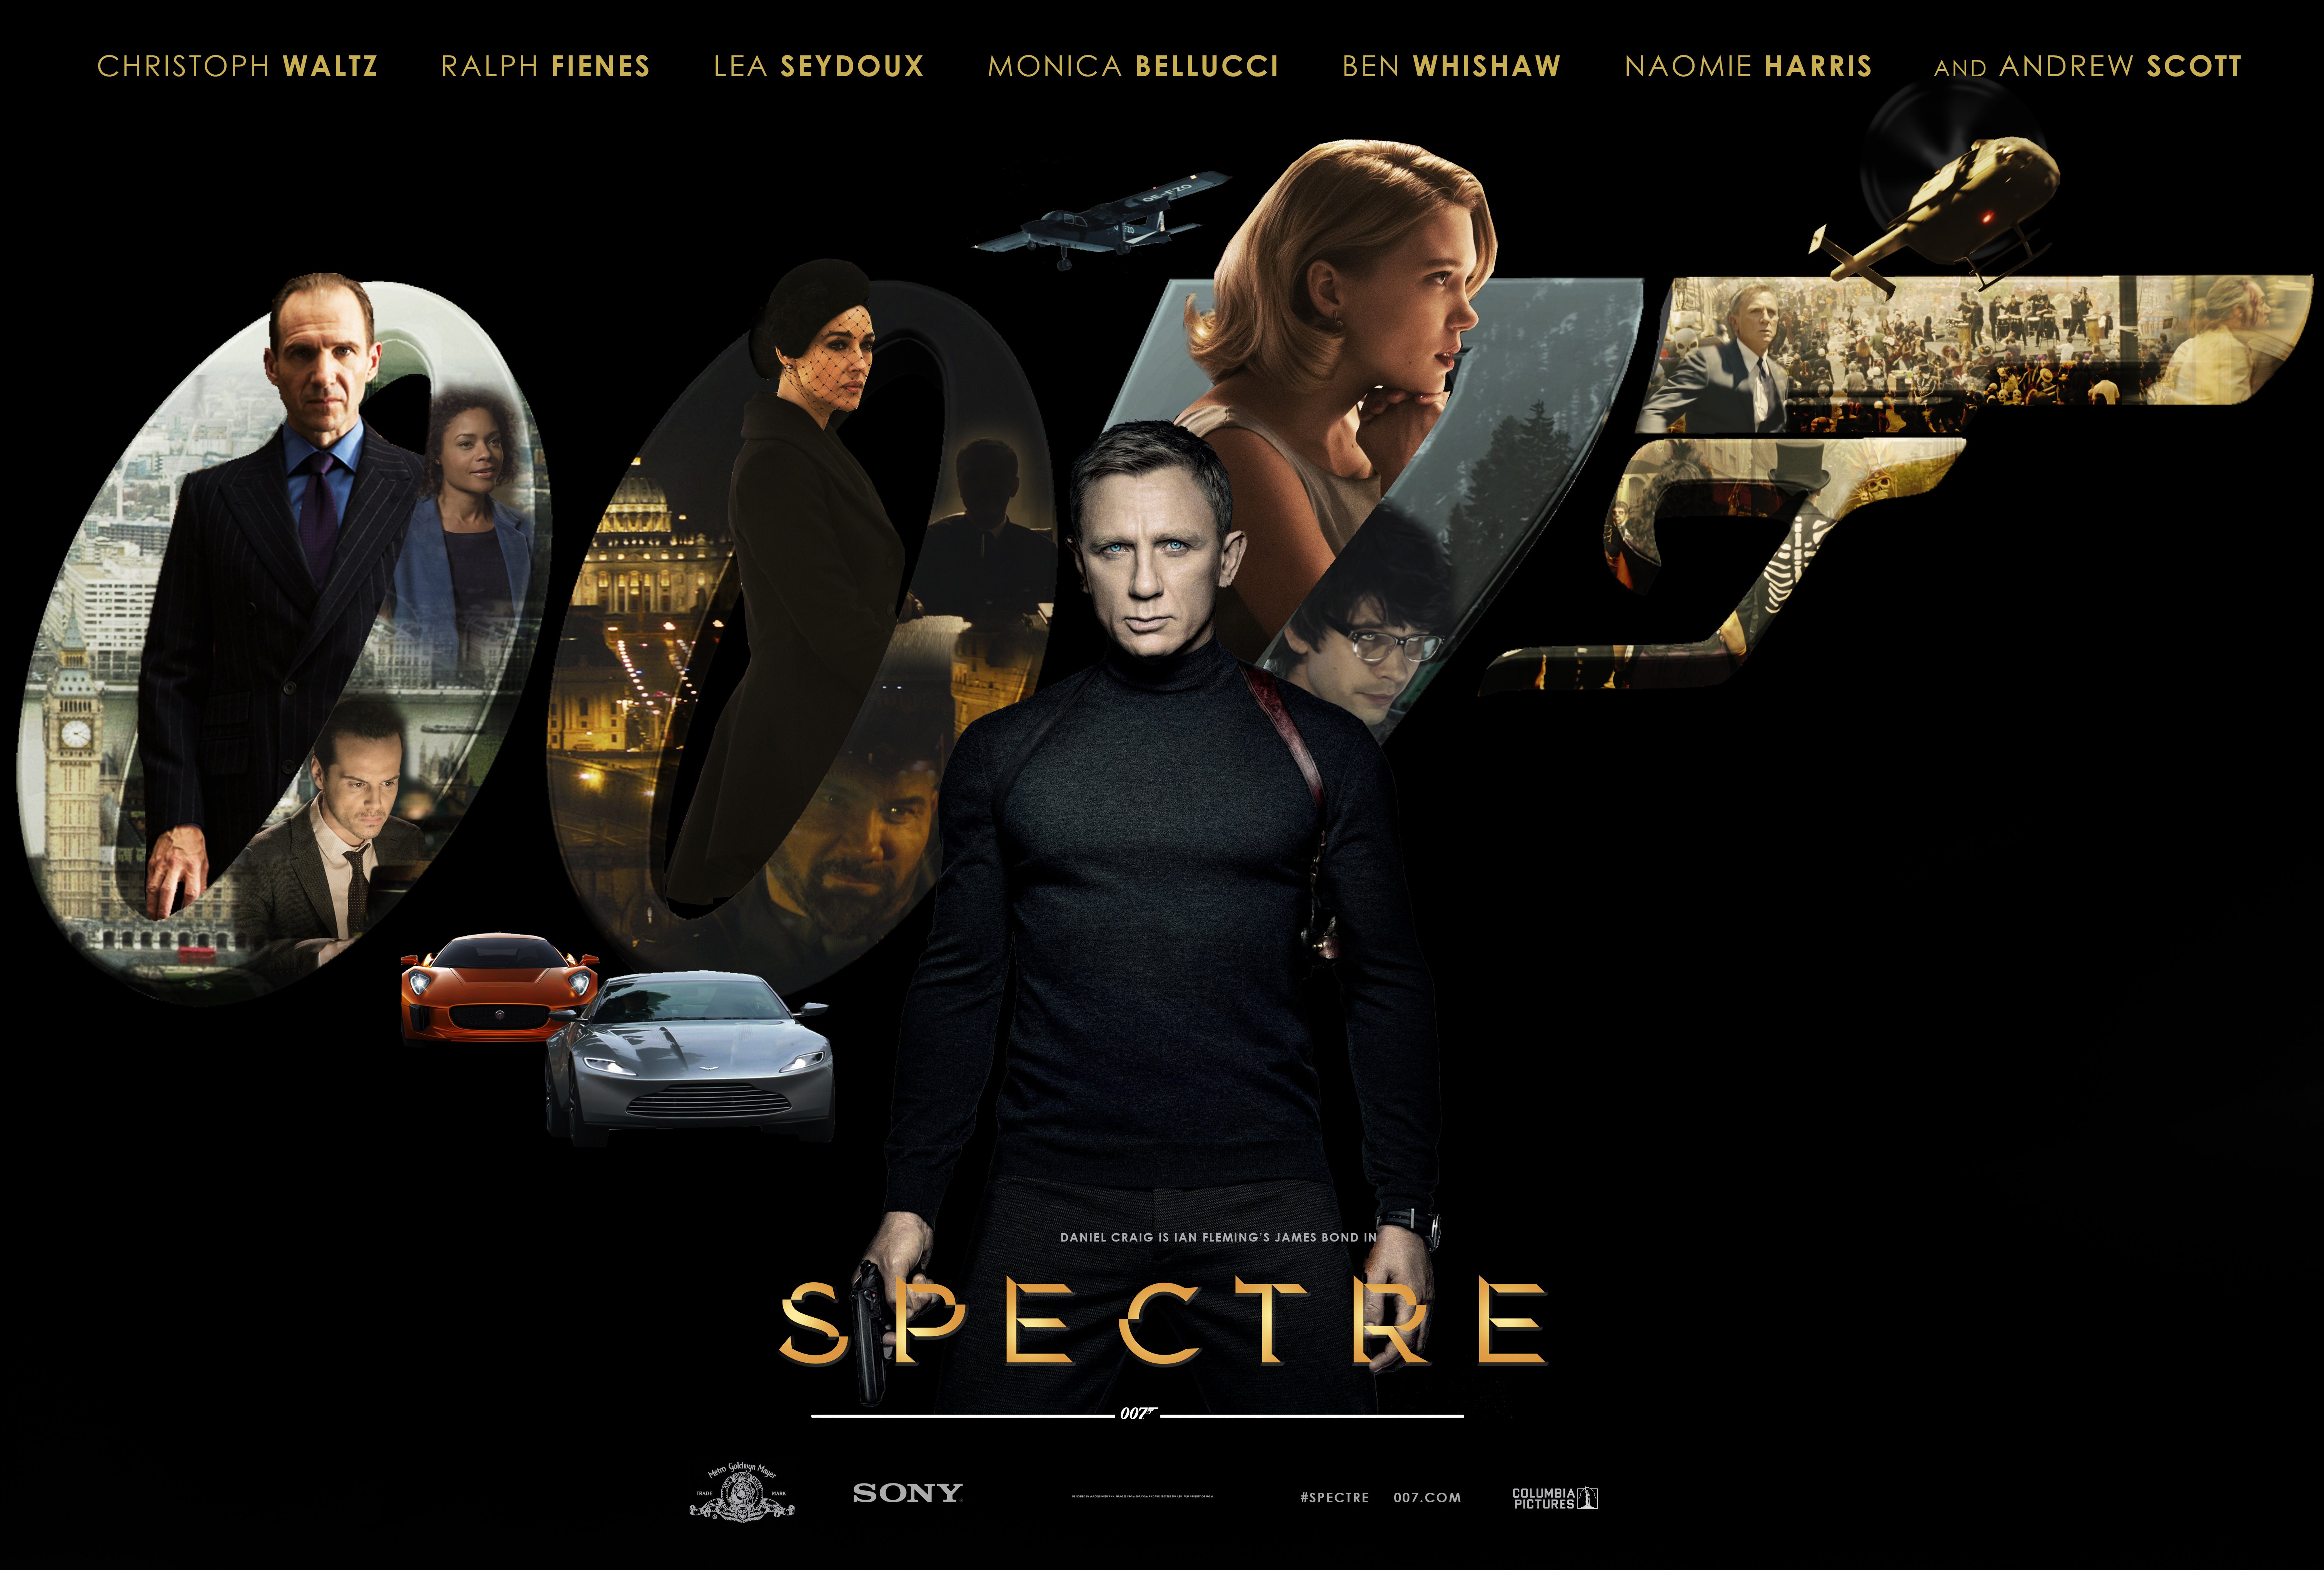 007 spectre stream online putlocker